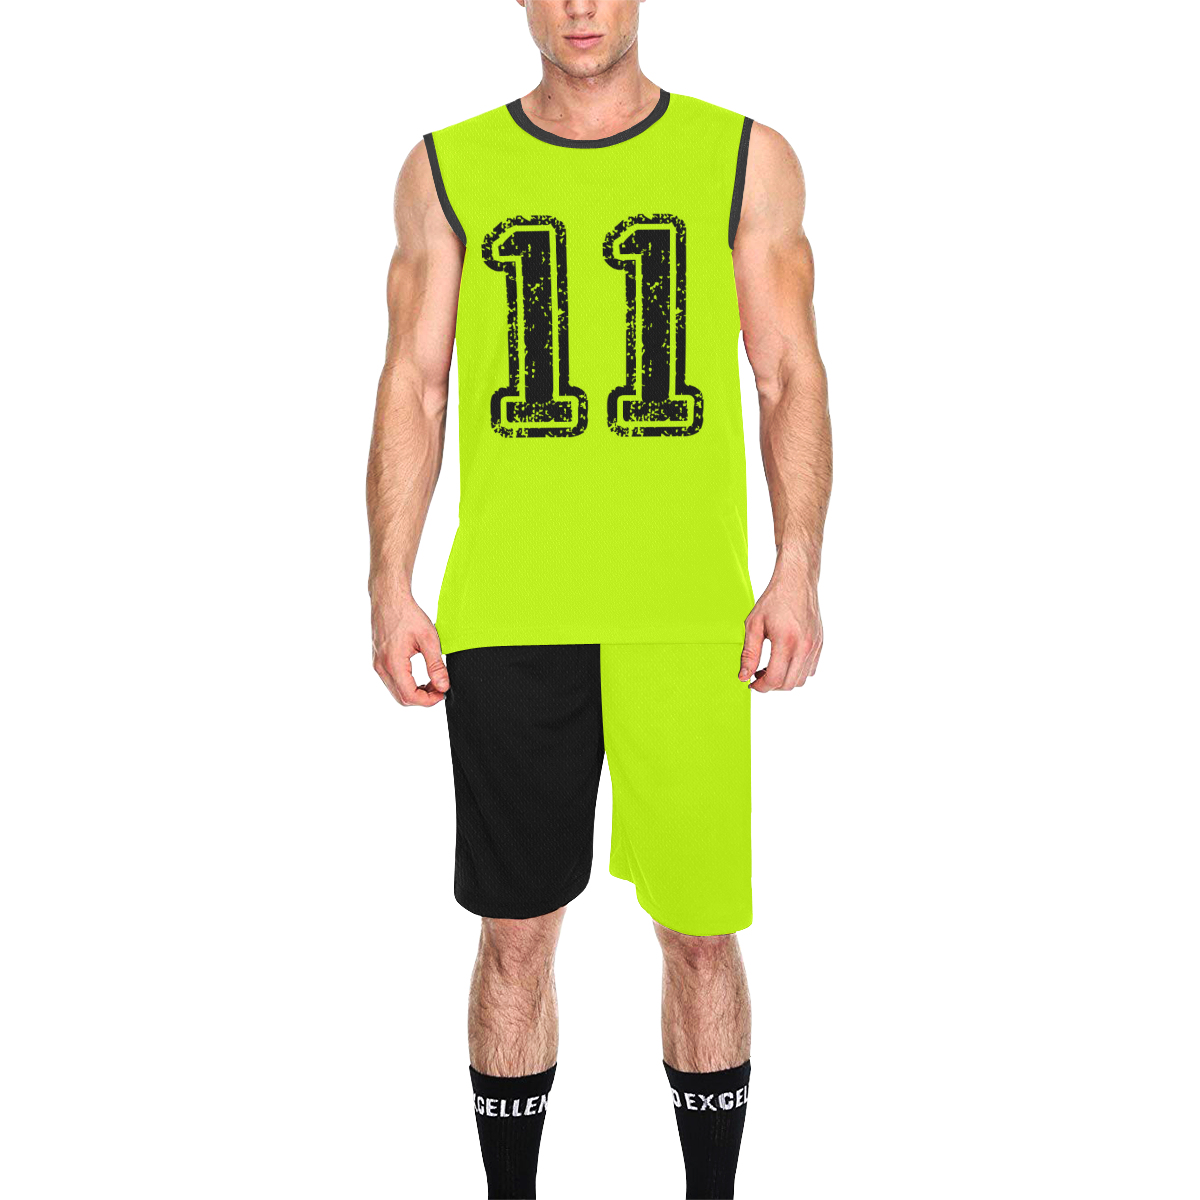 Lime Green and Black color Team Basketball Uniforms All Over Print Basketball Uniform